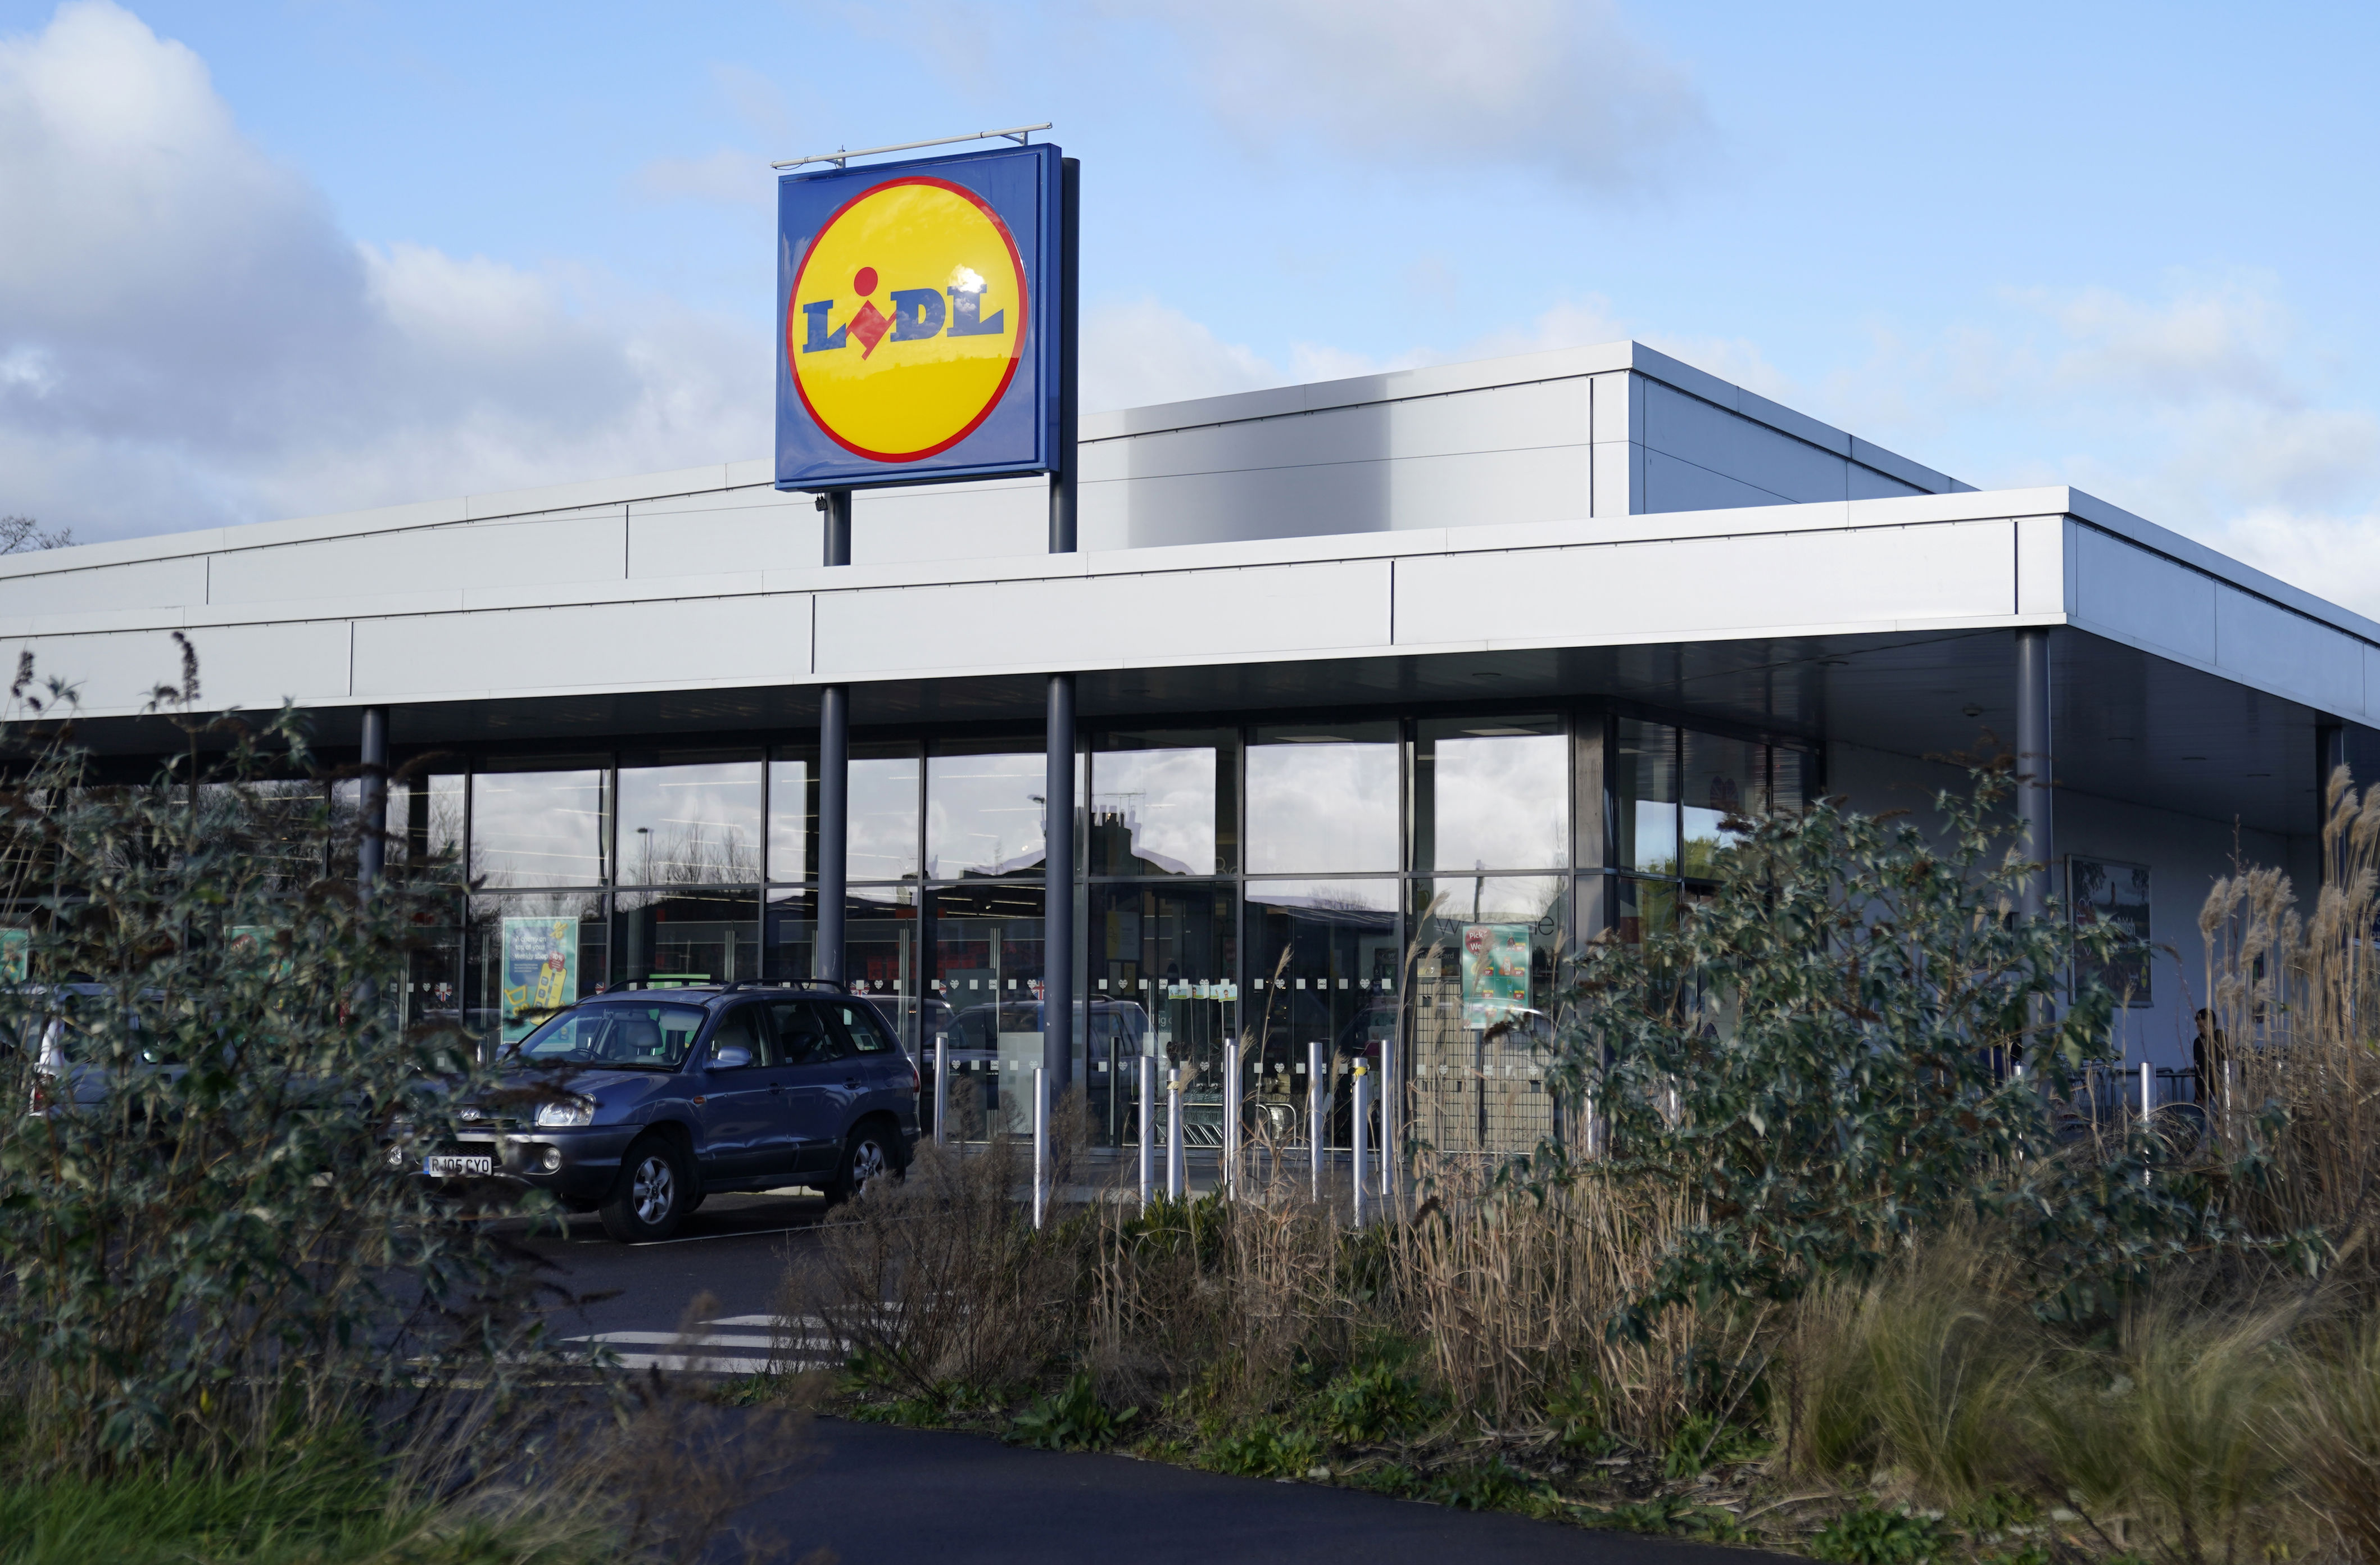 lidl plans hundreds of new supermarket openings across britain